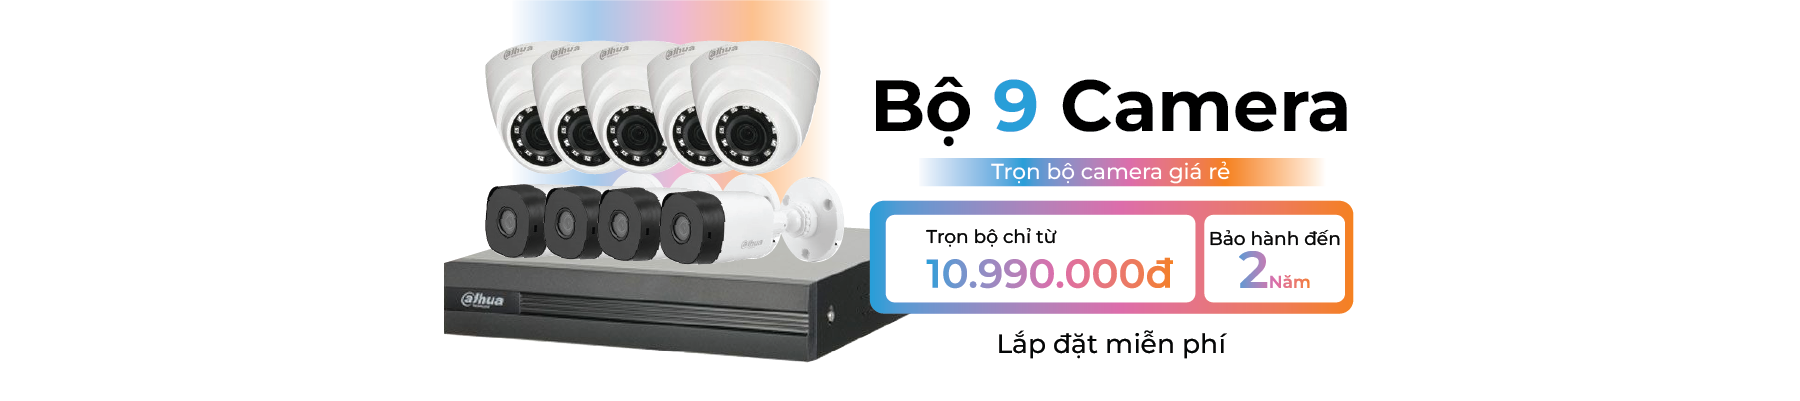 tron-bo-9-camera